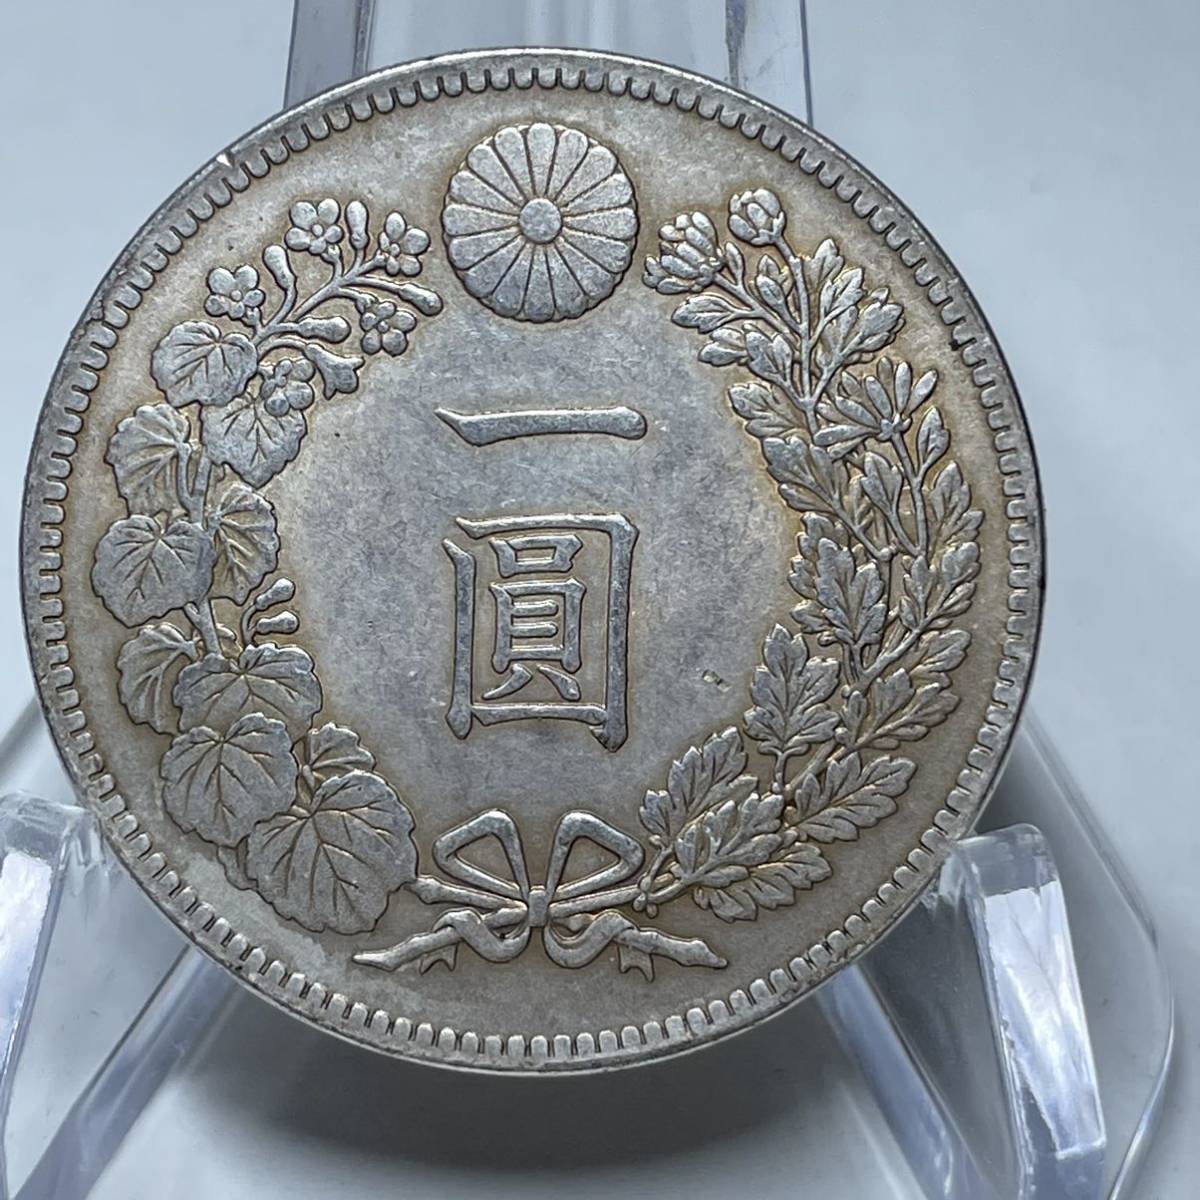 WX620日本記念メダル 一圓 明治45年 菊紋 日本硬貨 貿易銀 日本古銭 コレクションコイン 貨幣 重さ約26g_画像1